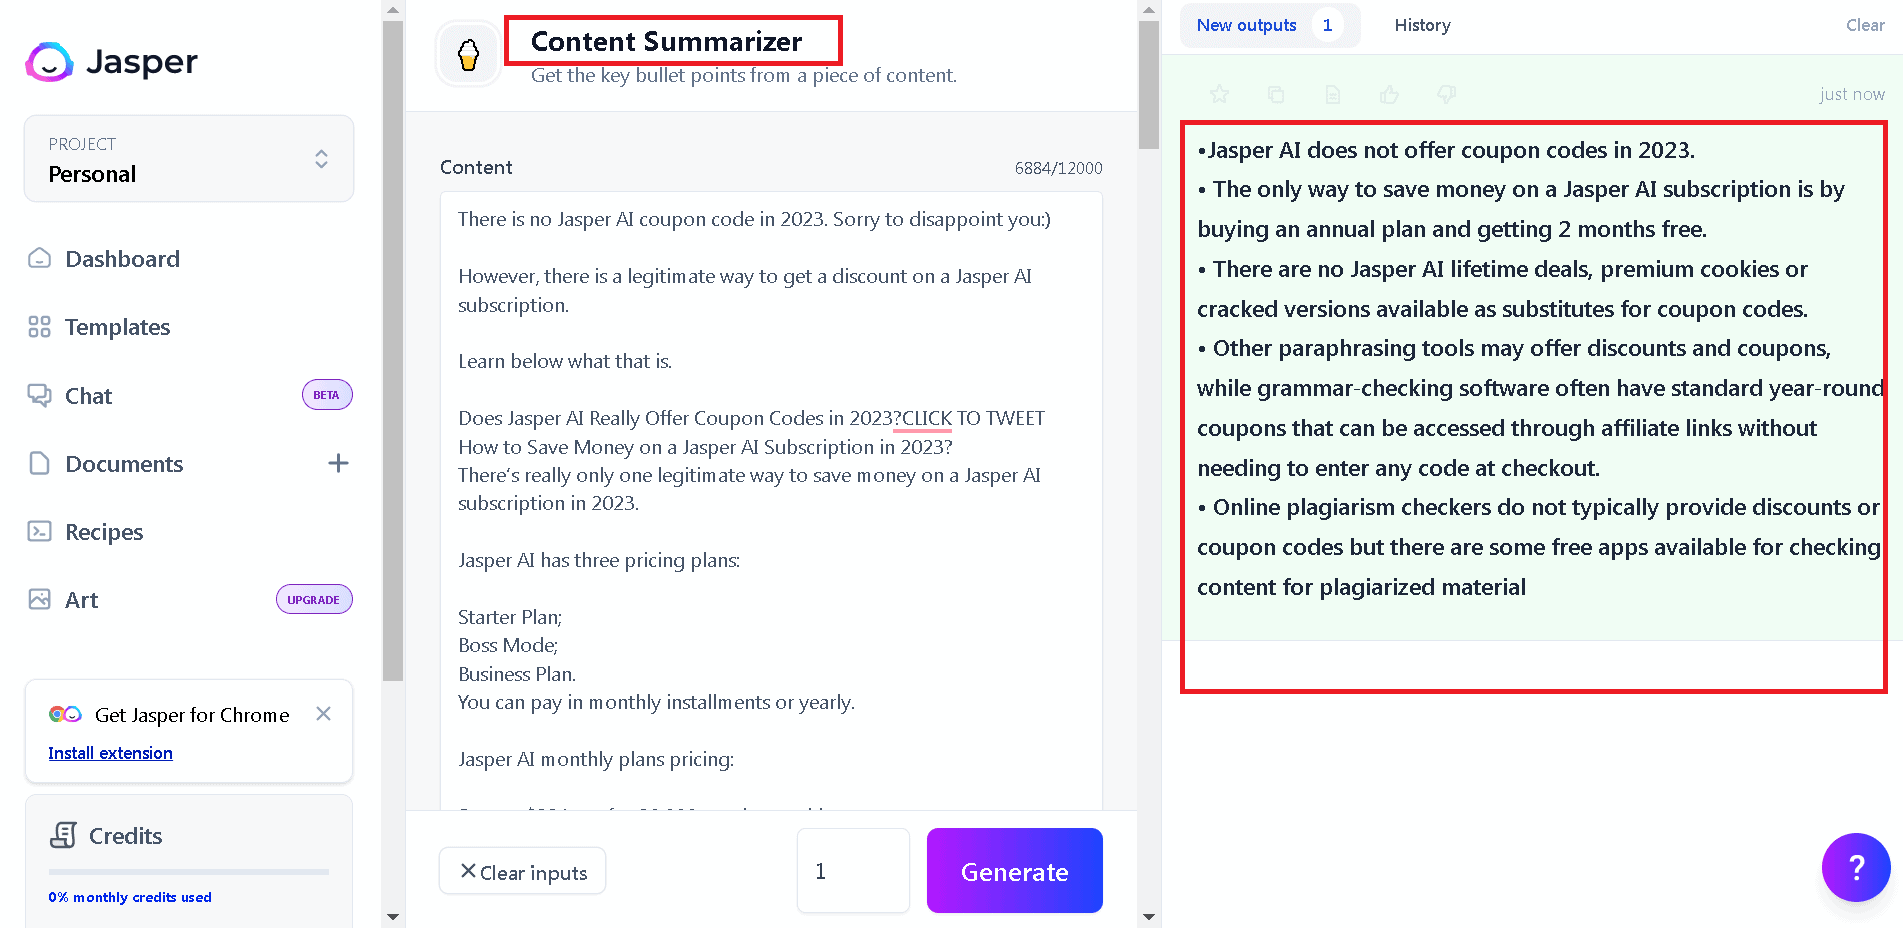 Jasper AI content summarizer can replace Quillbot Summarizer